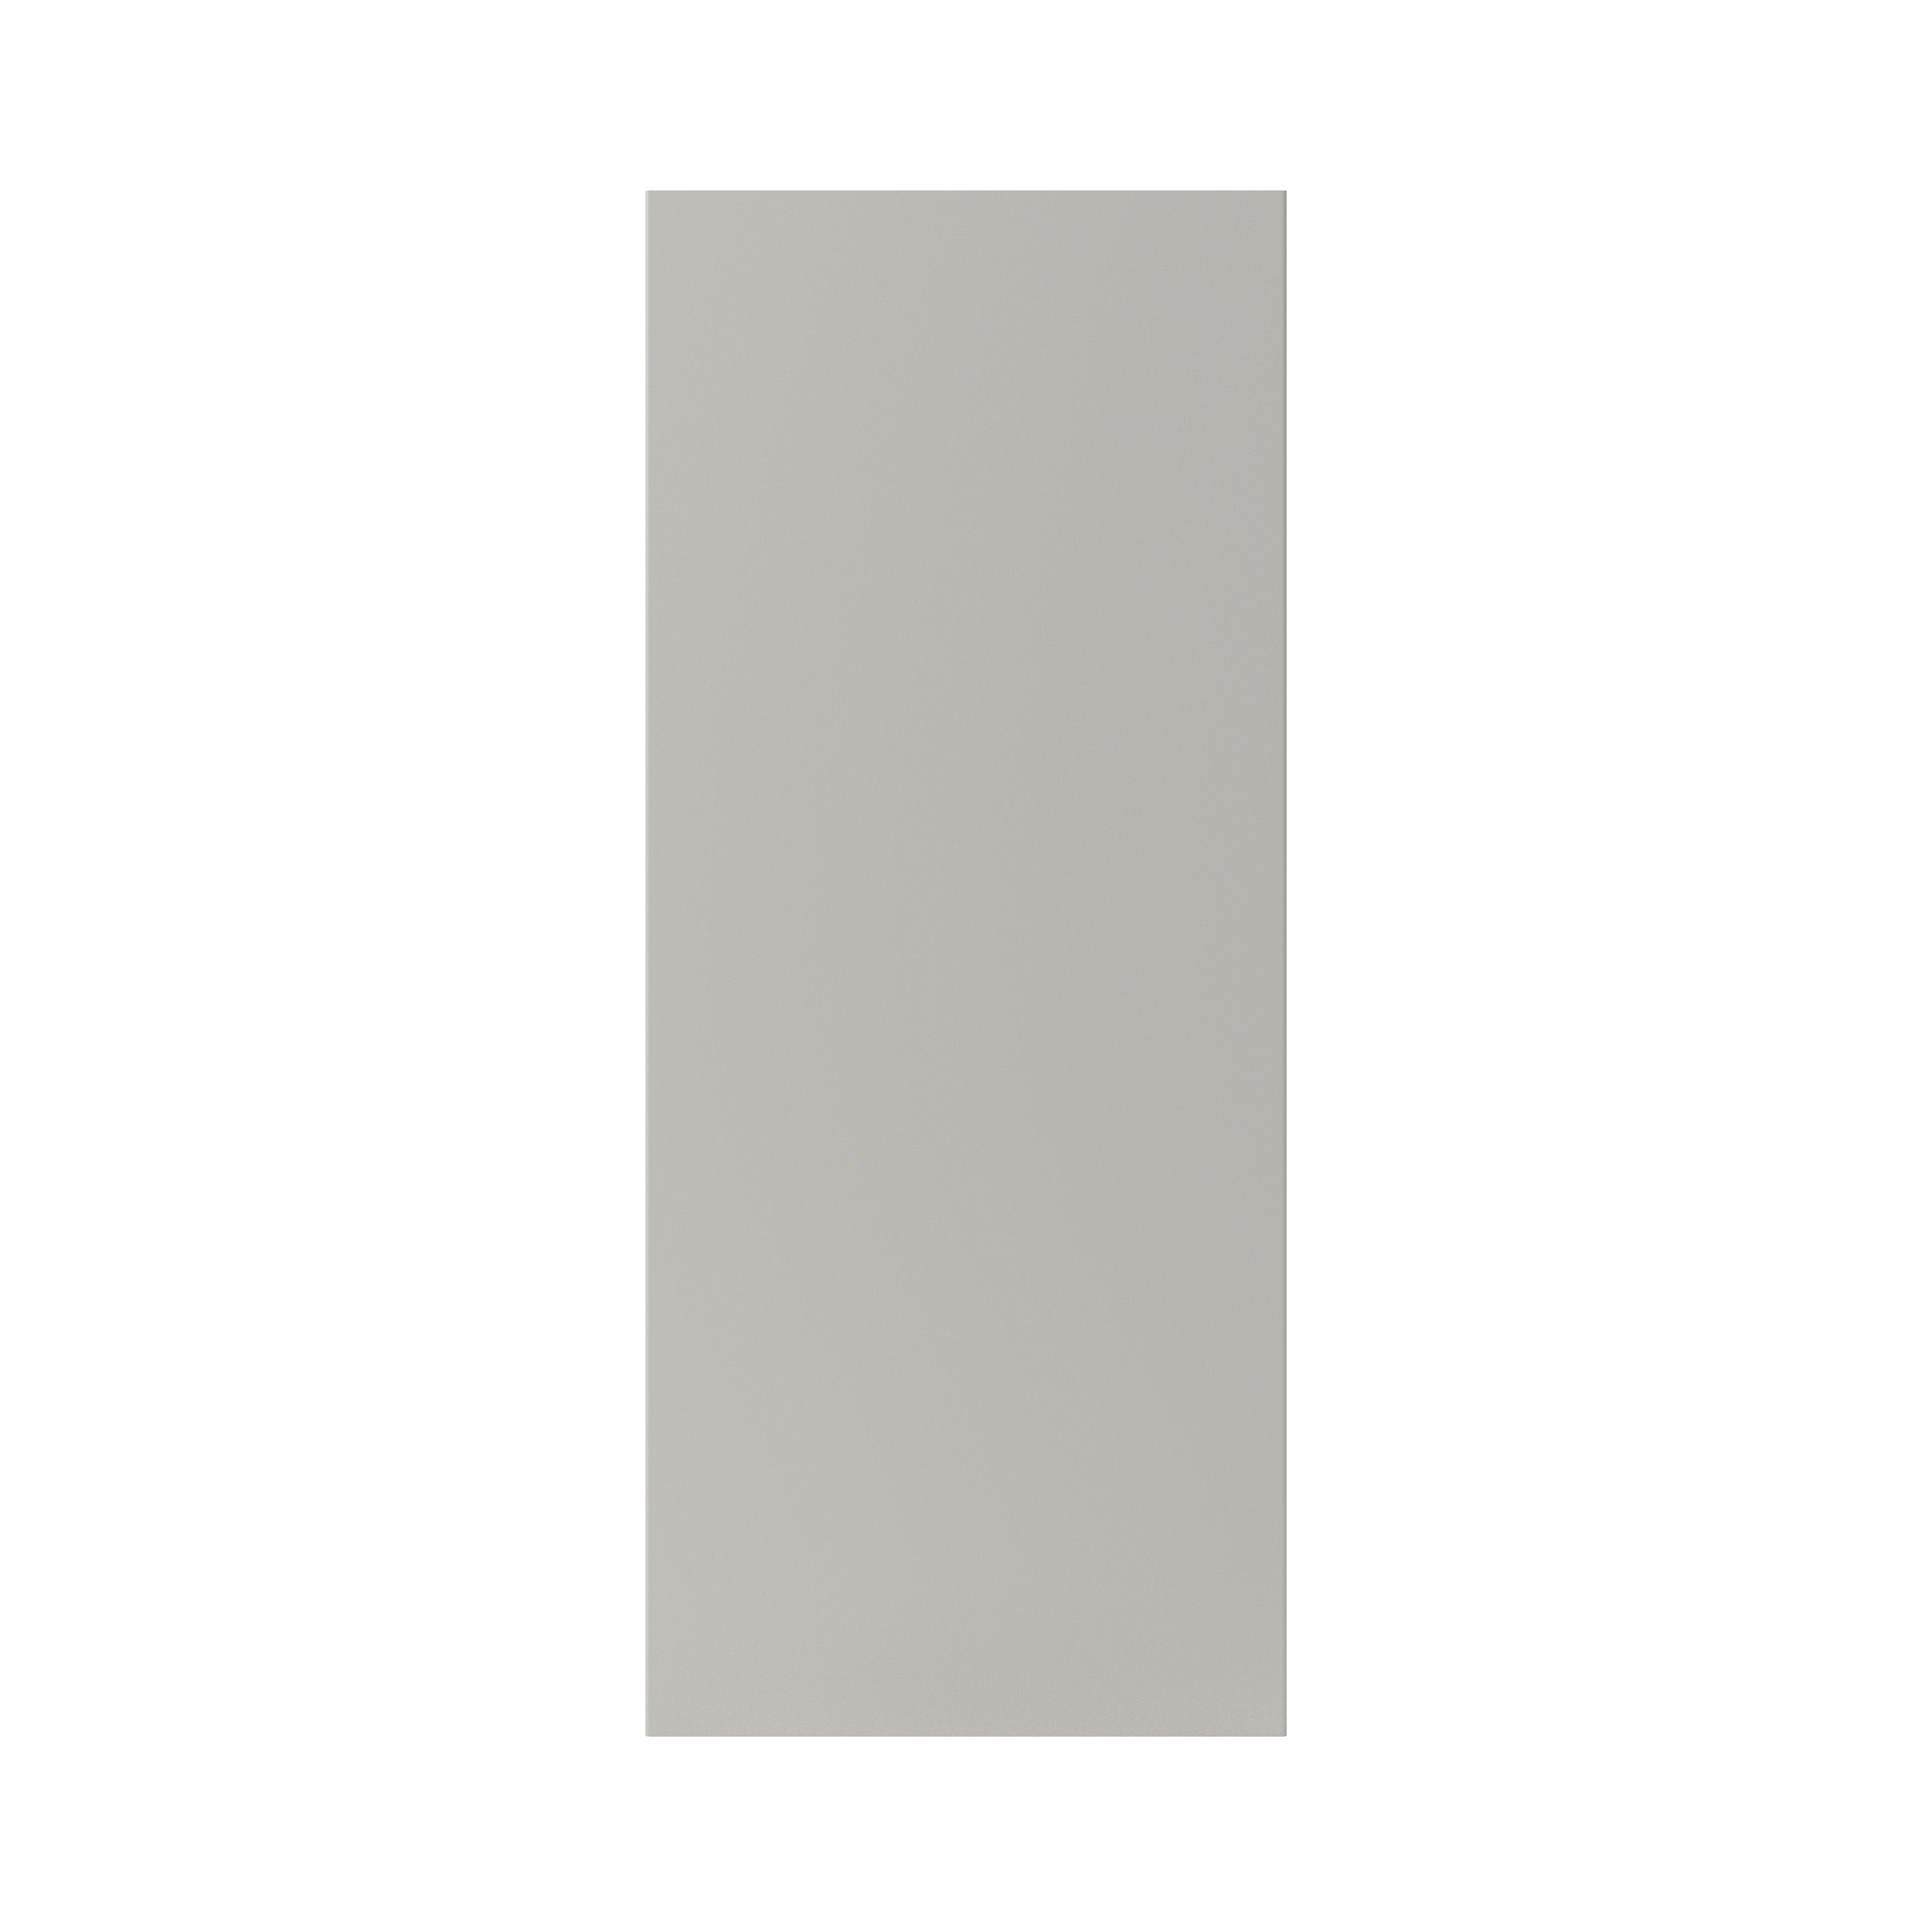 GoodHome Stevia Matt Pewter grey slab Highline Cabinet door (W)300mm (H)715mm (T)18mm